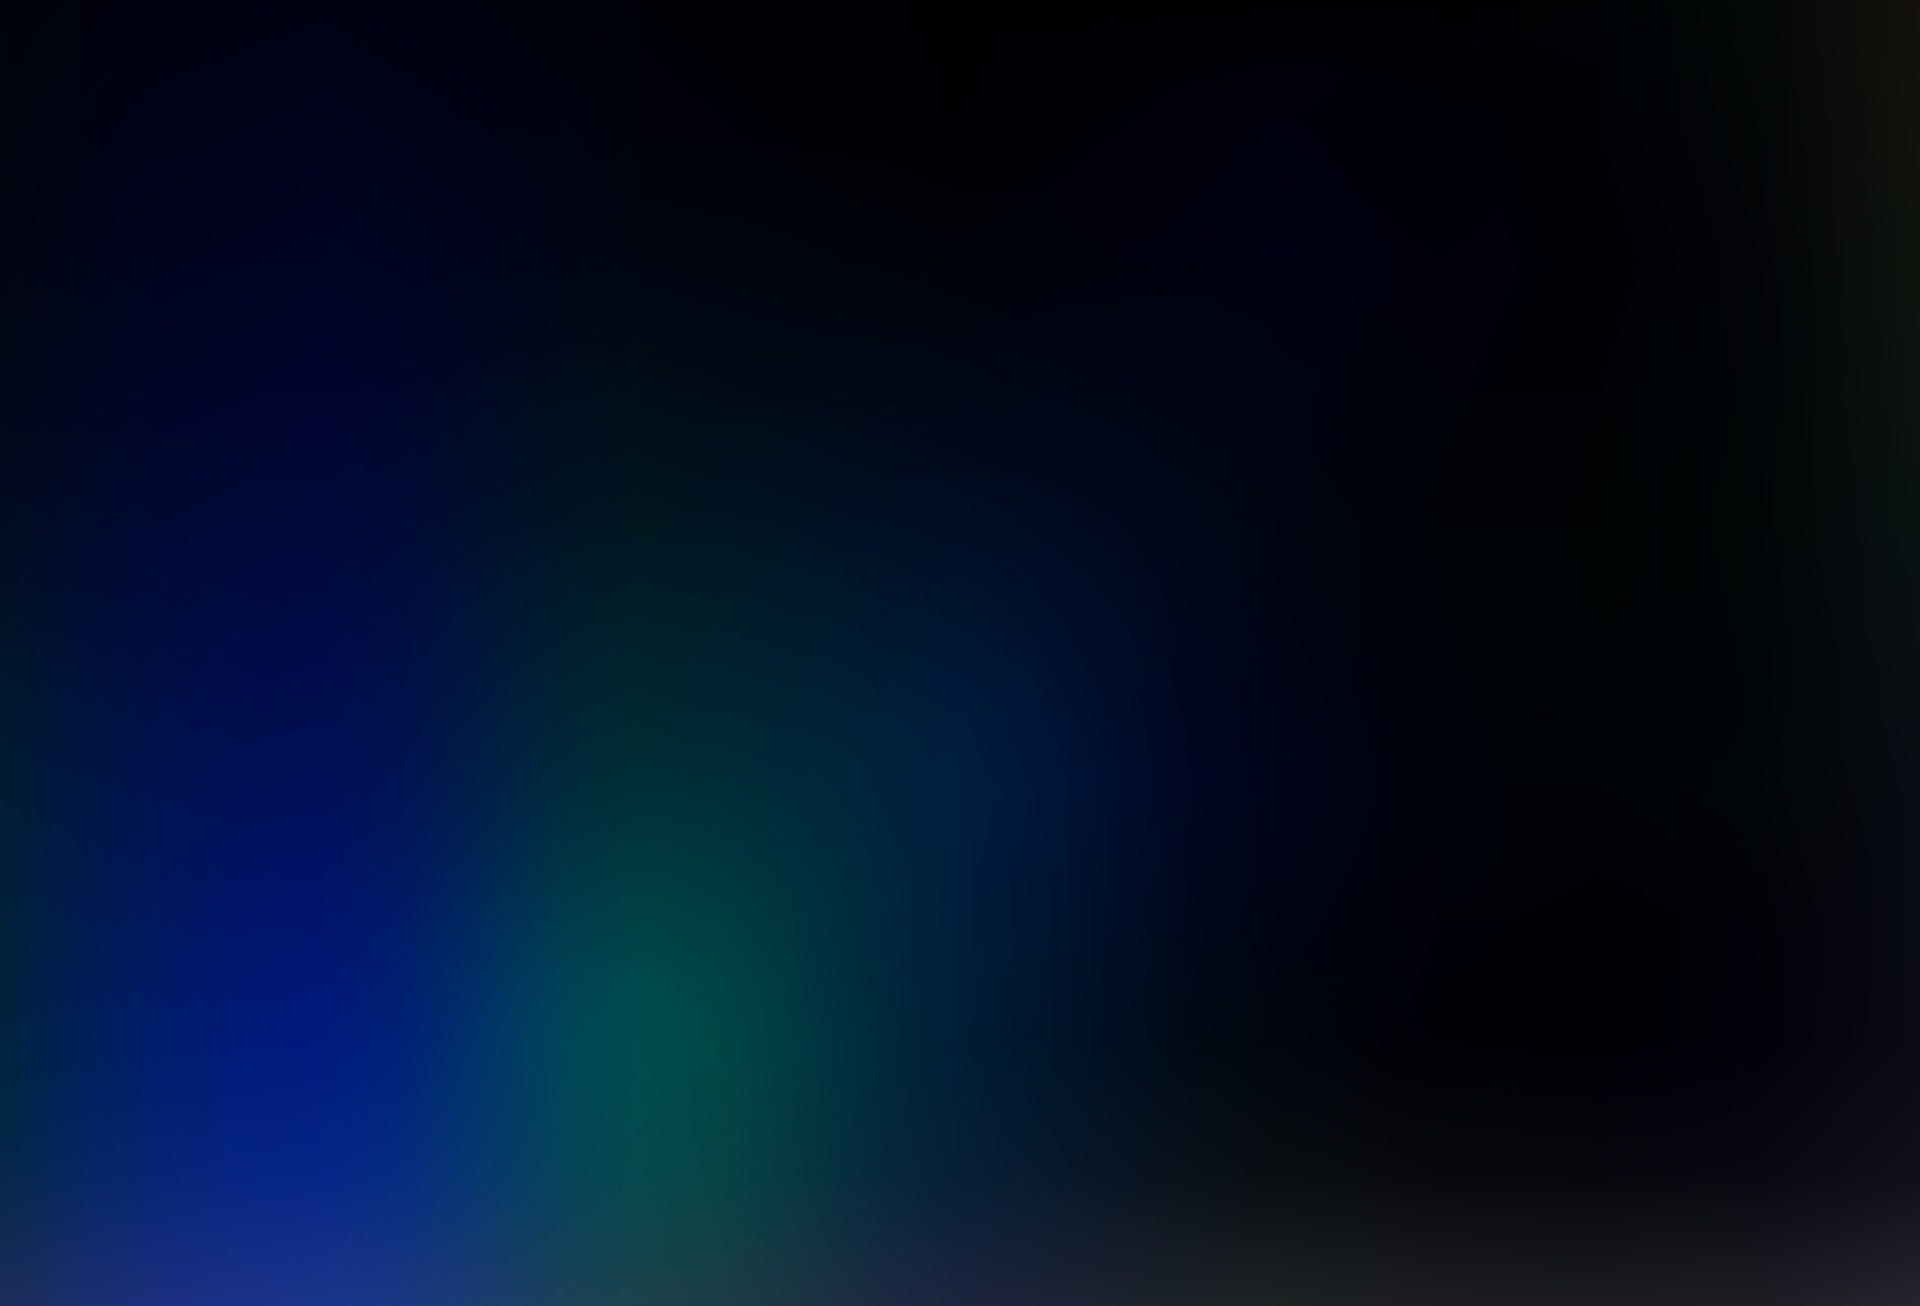 Dark BLUE vector blurred shine abstract background. 11580838 Vector Art ...